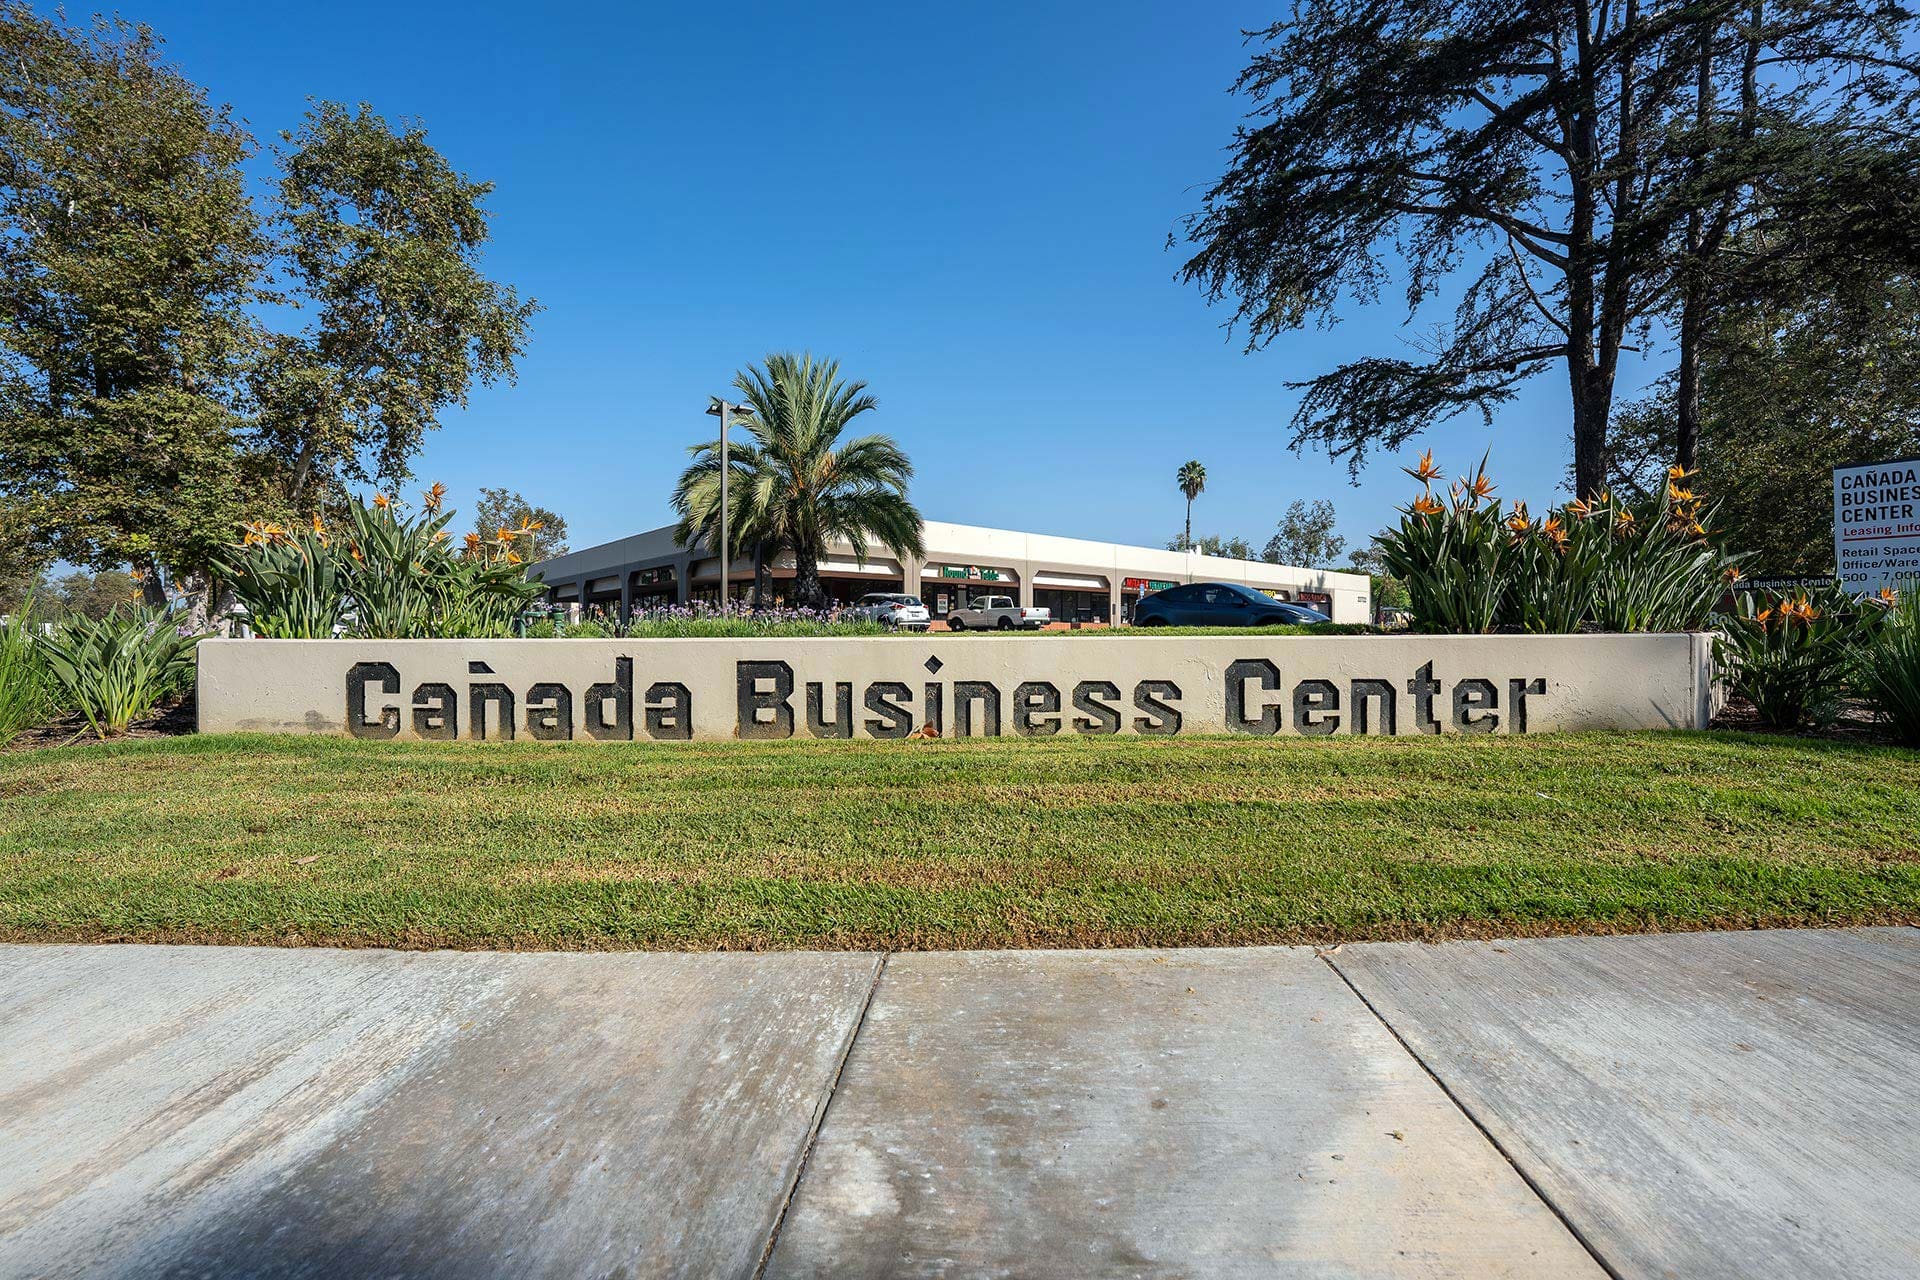 Canada Business Center exterior entrance sign photo